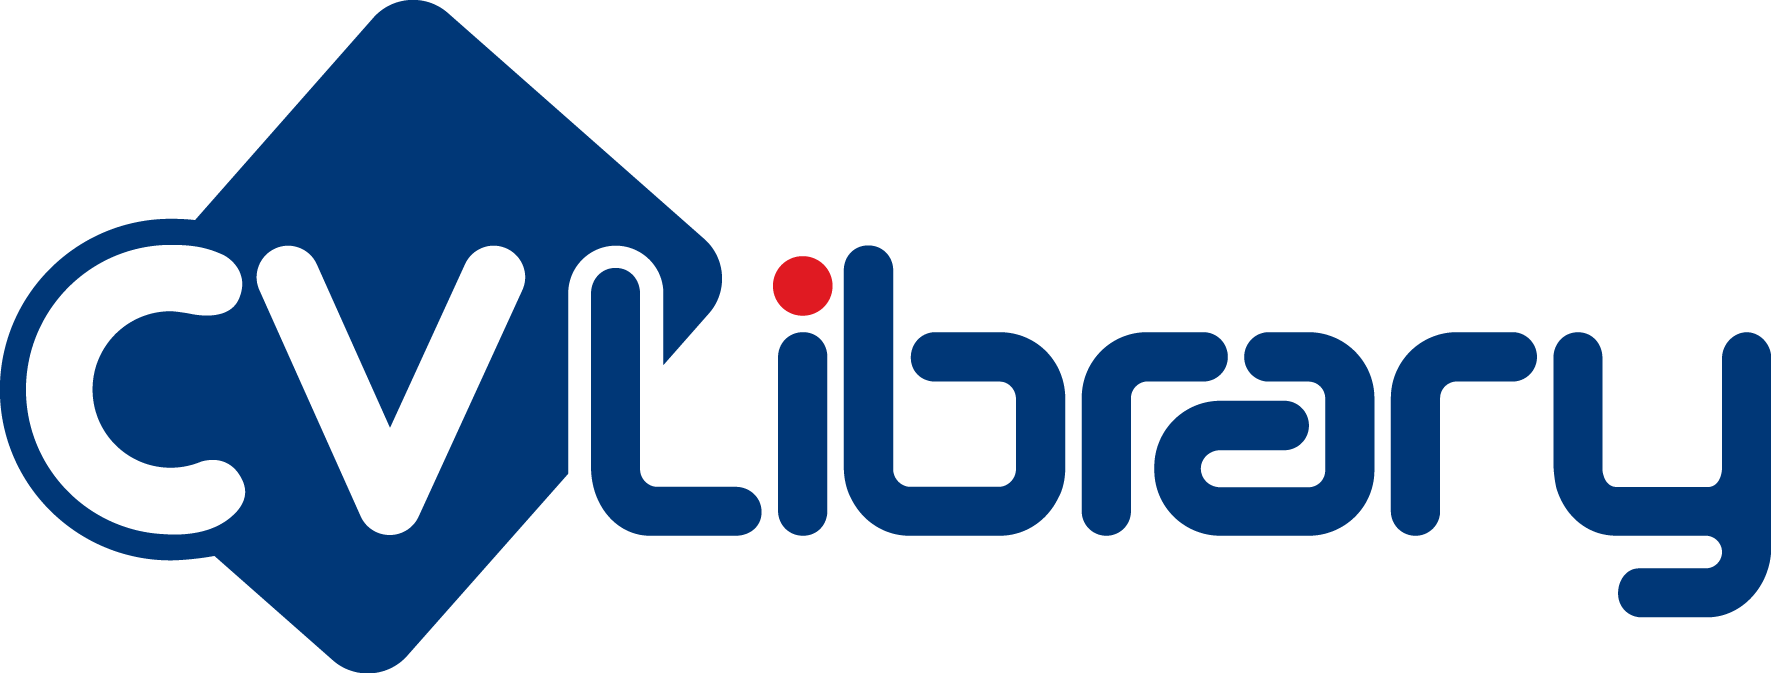 Cv-library Logo - Cv Library Logo Png Clipart (1771x673), Png Download